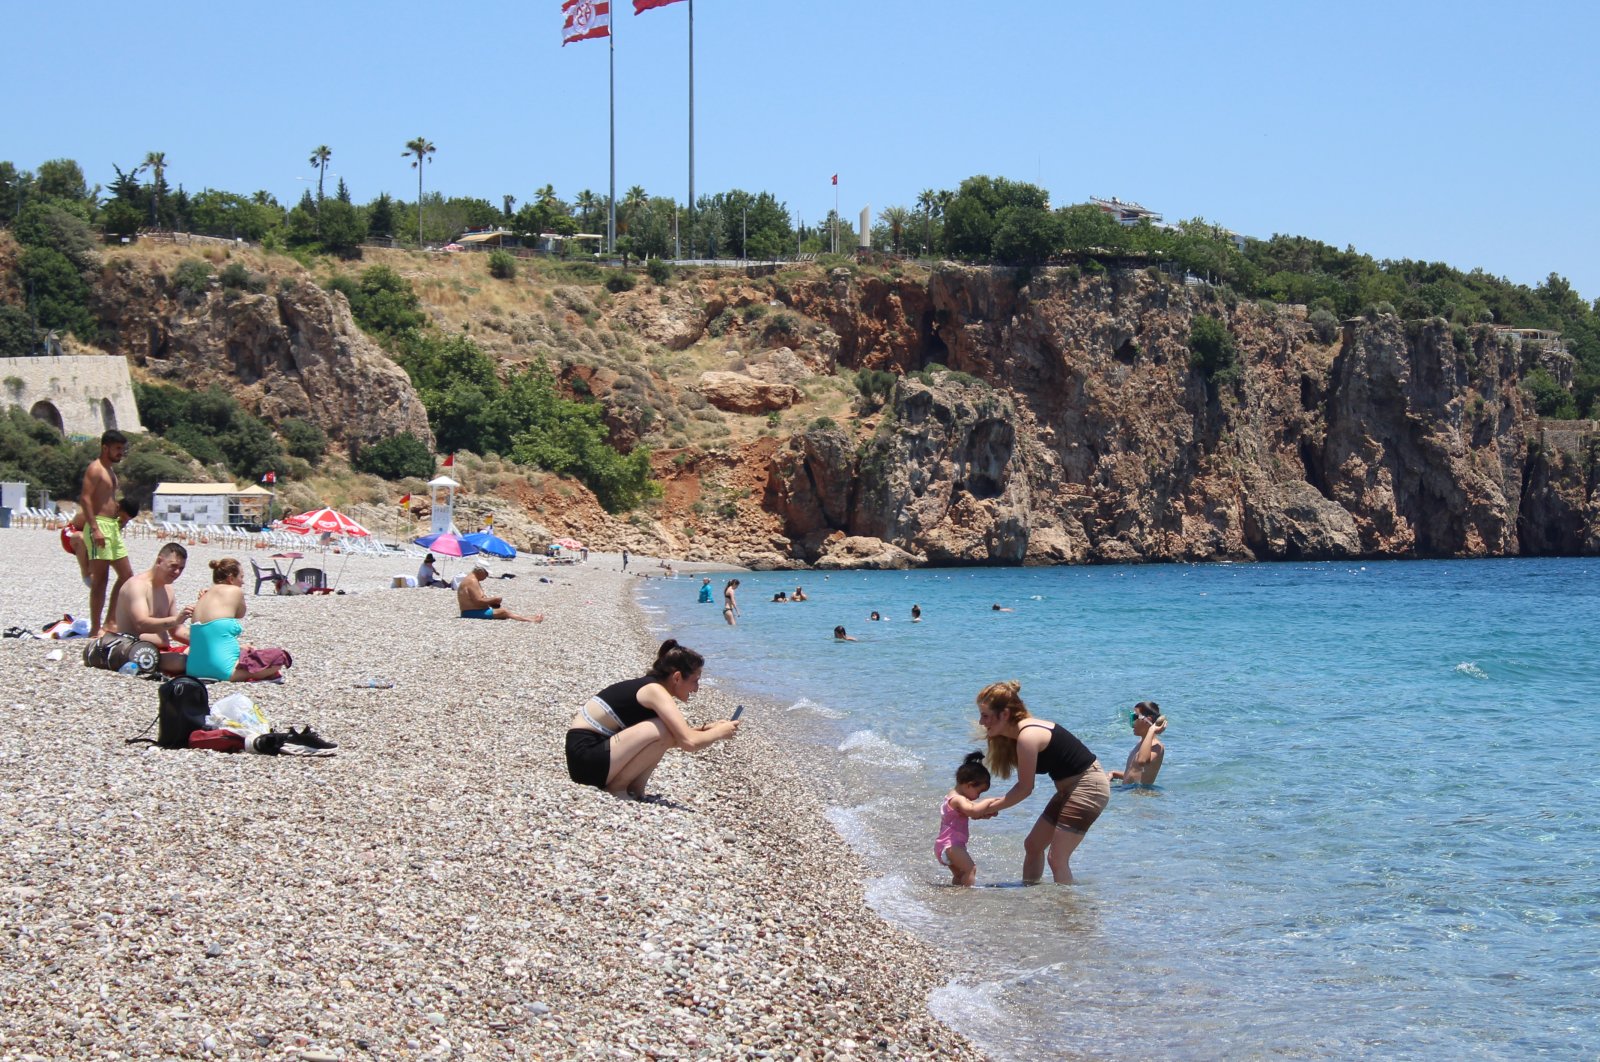 People swim and sunbathe in Antalya, Turkey, June 28, 2020. (DHA Photo)